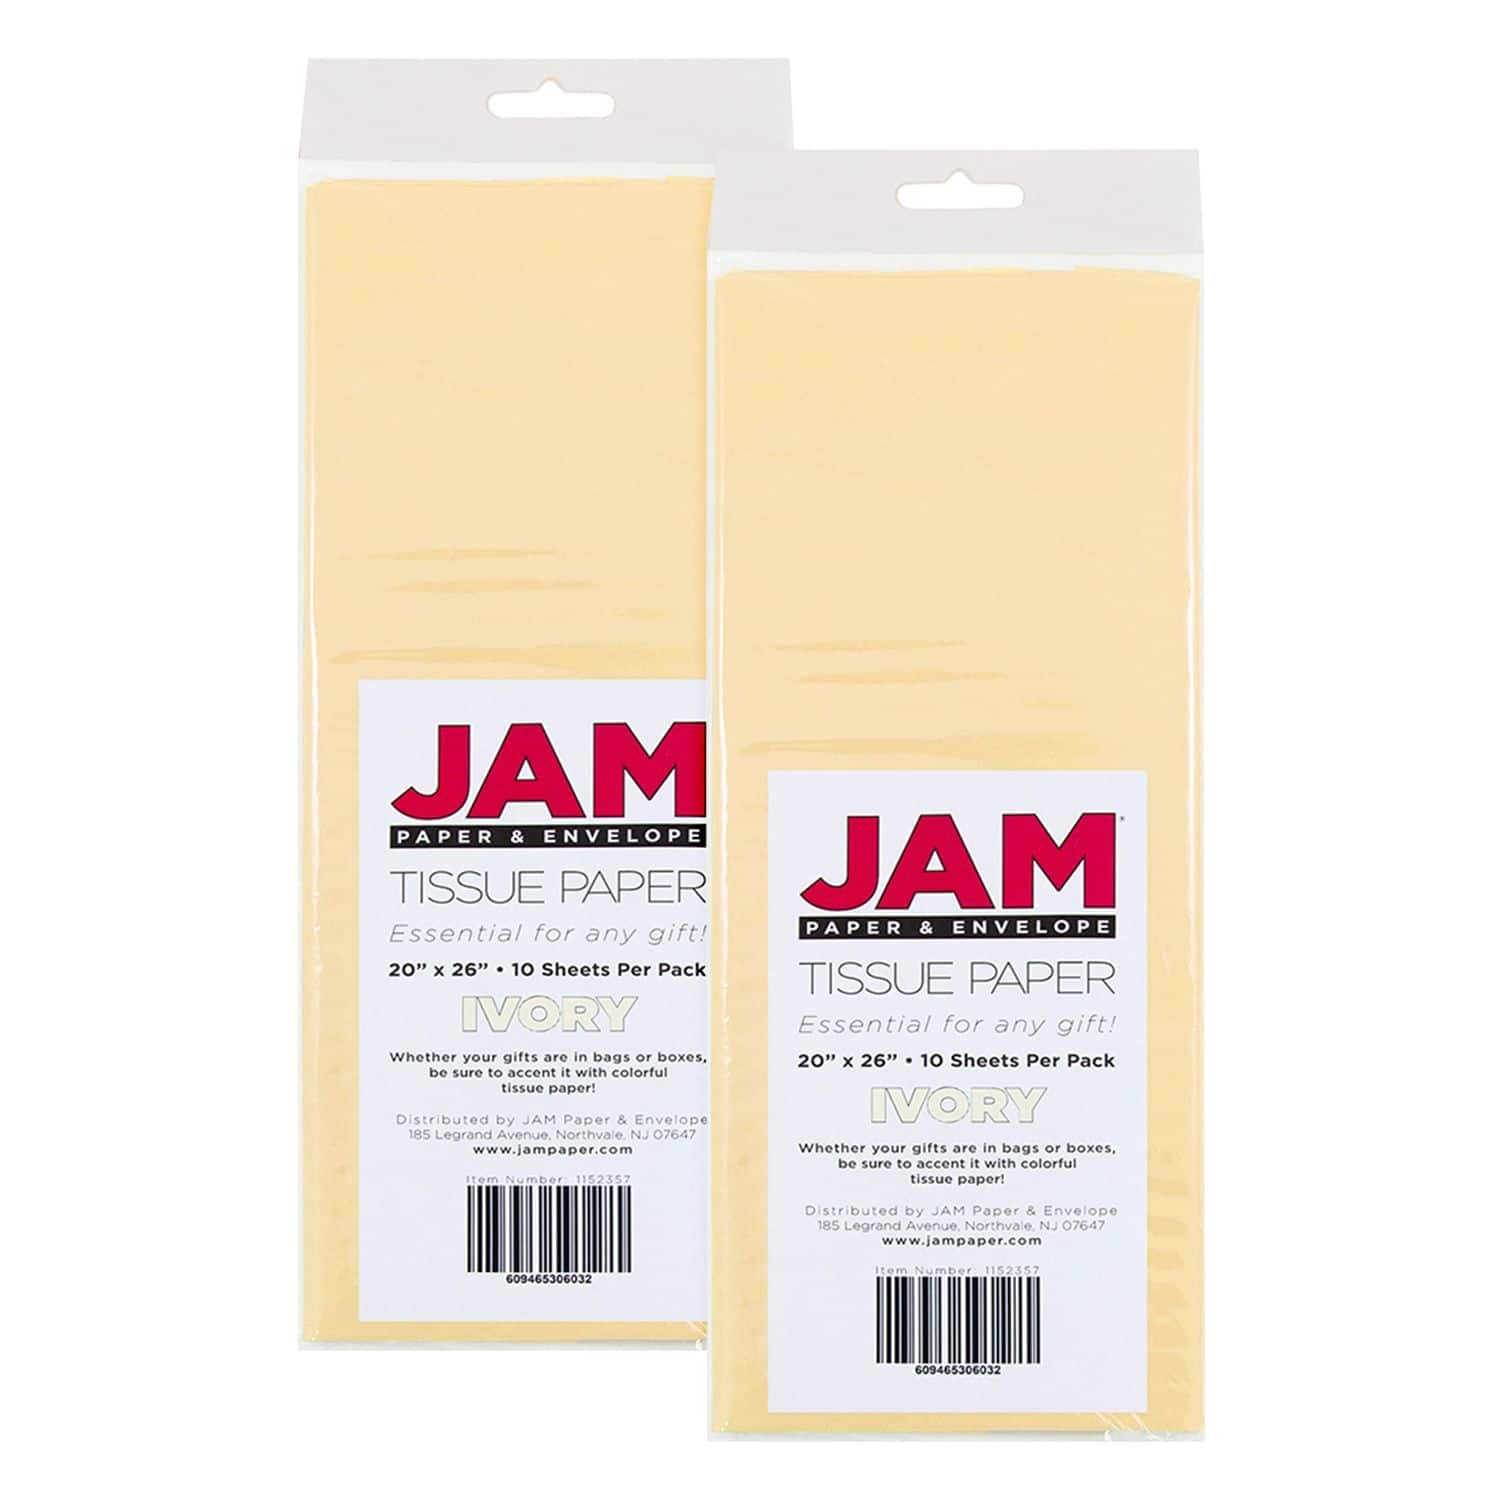 Jam Paper Tissue Paper - Fuchsia - 10 Sheets/Pack